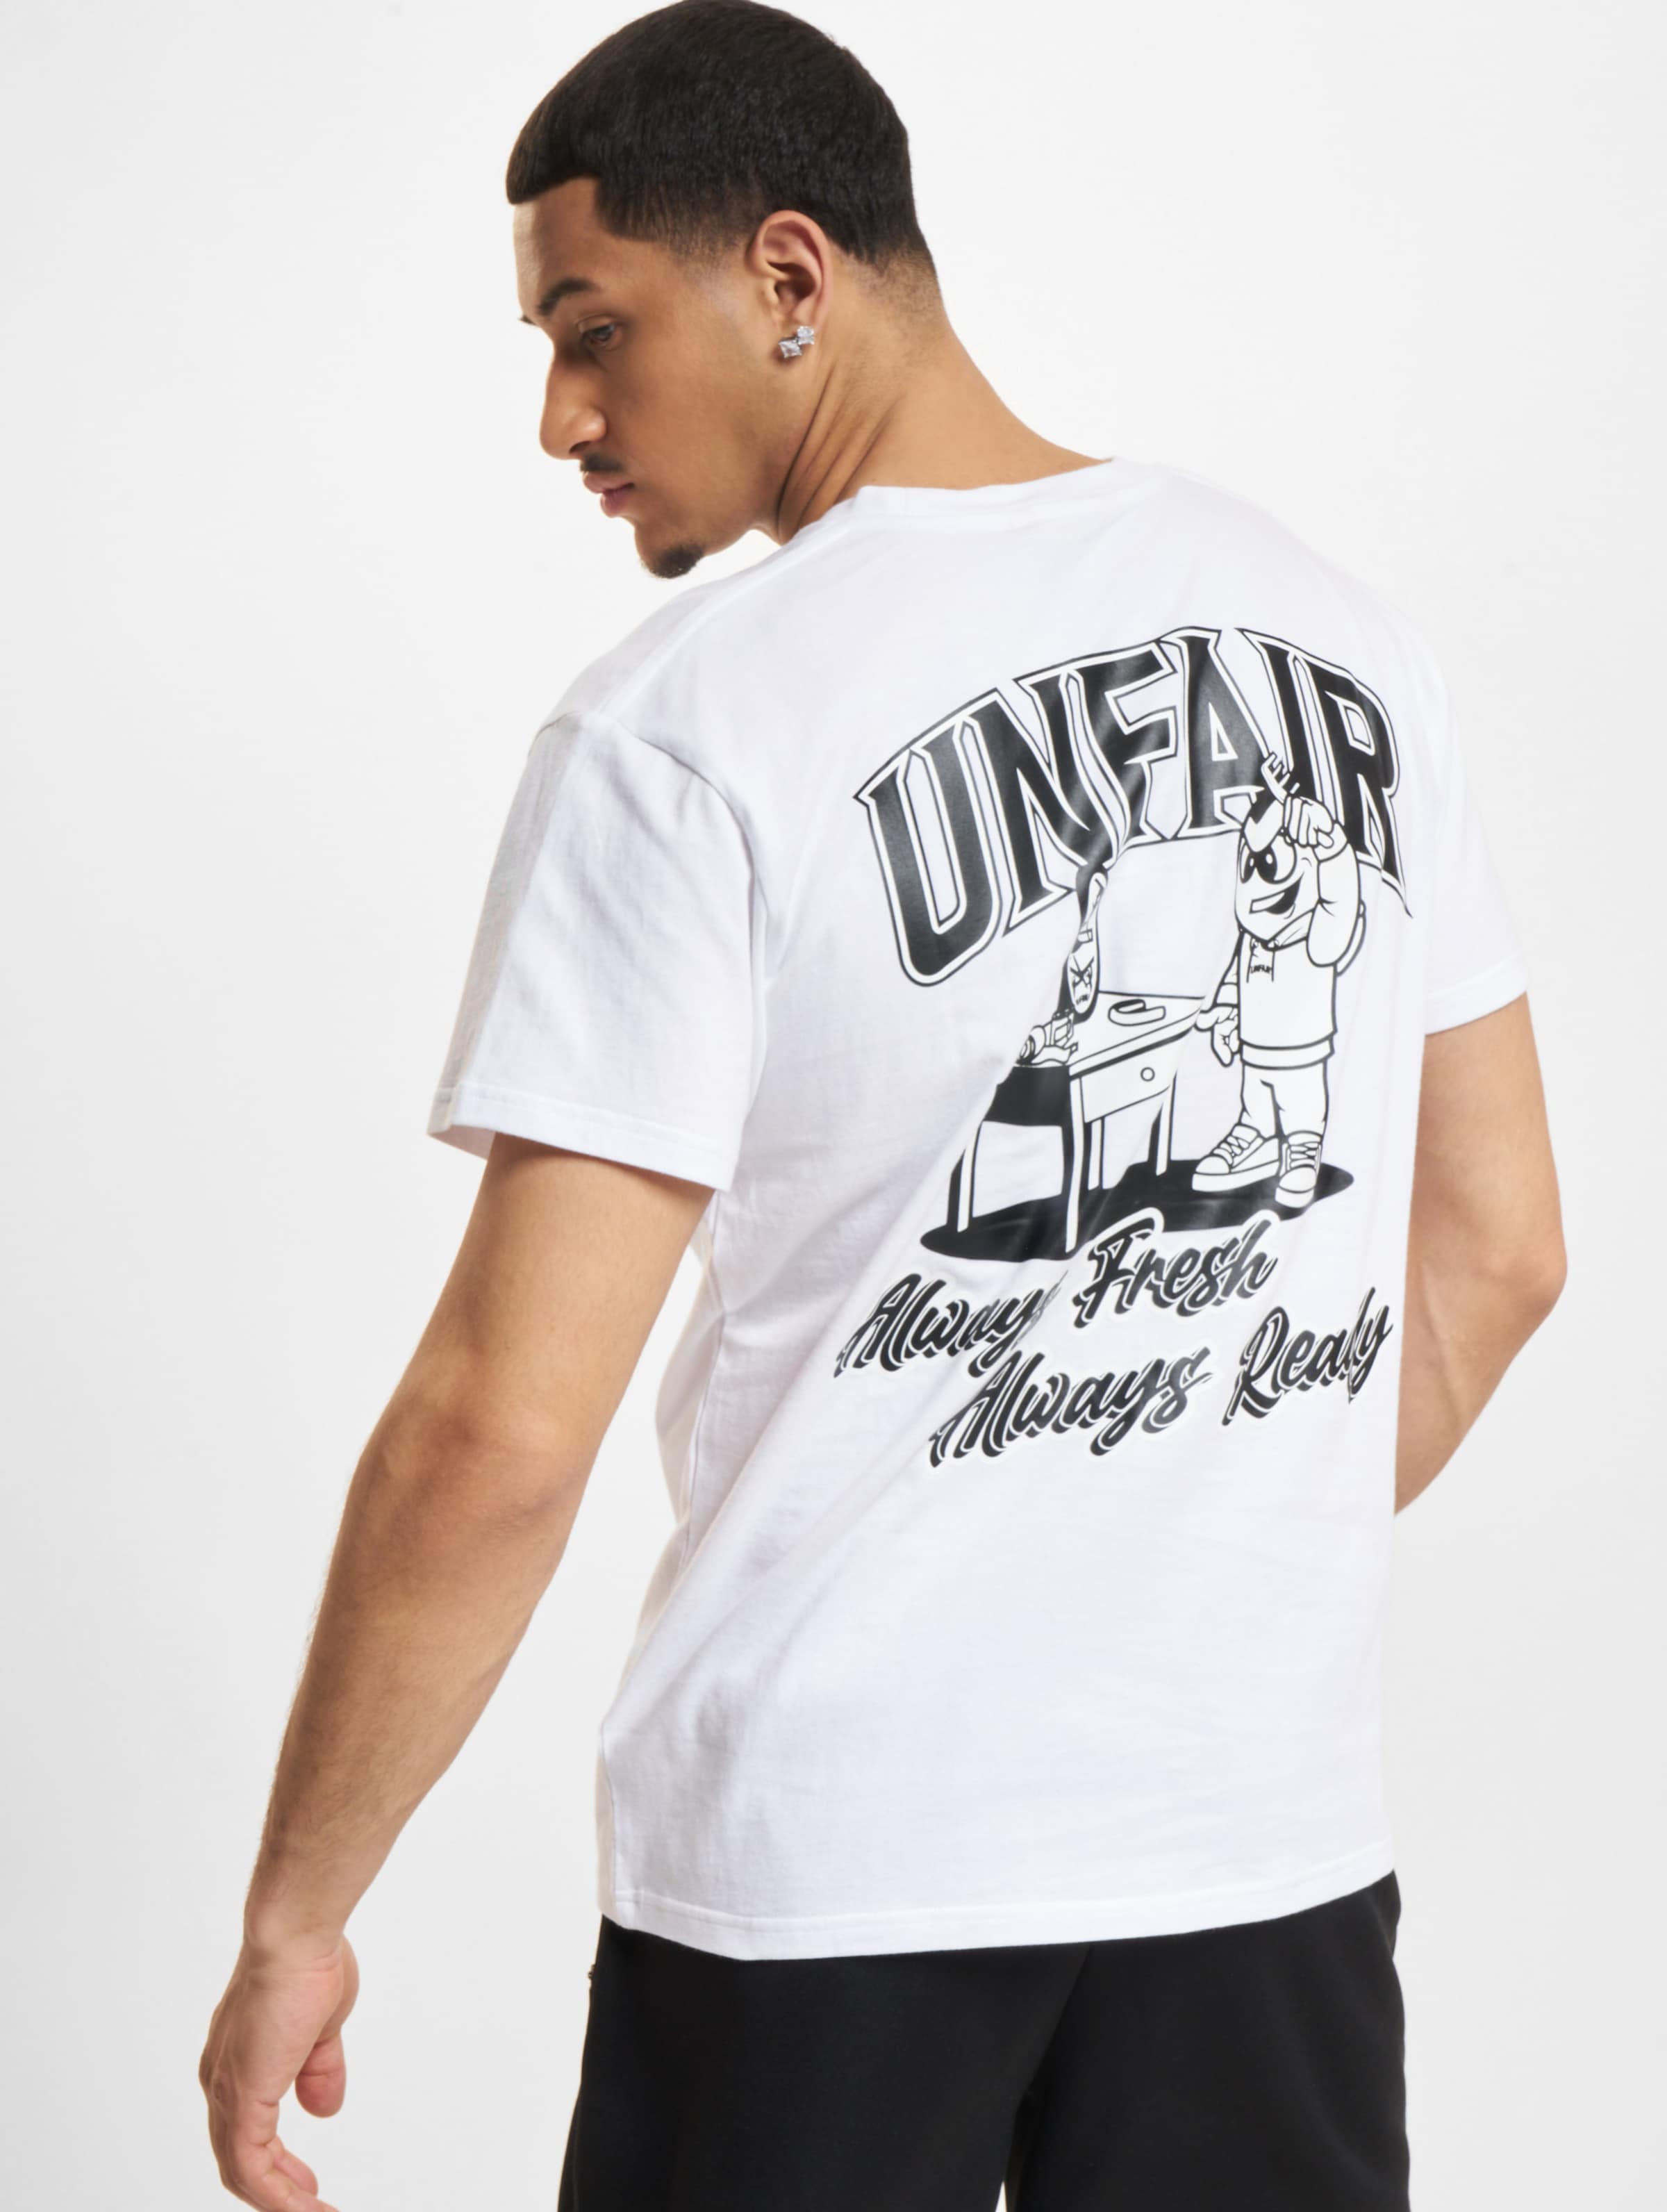 UNFAIR ATHLETICS Always Ready T-Shirt Männer,Unisex op kleur wit, Maat M